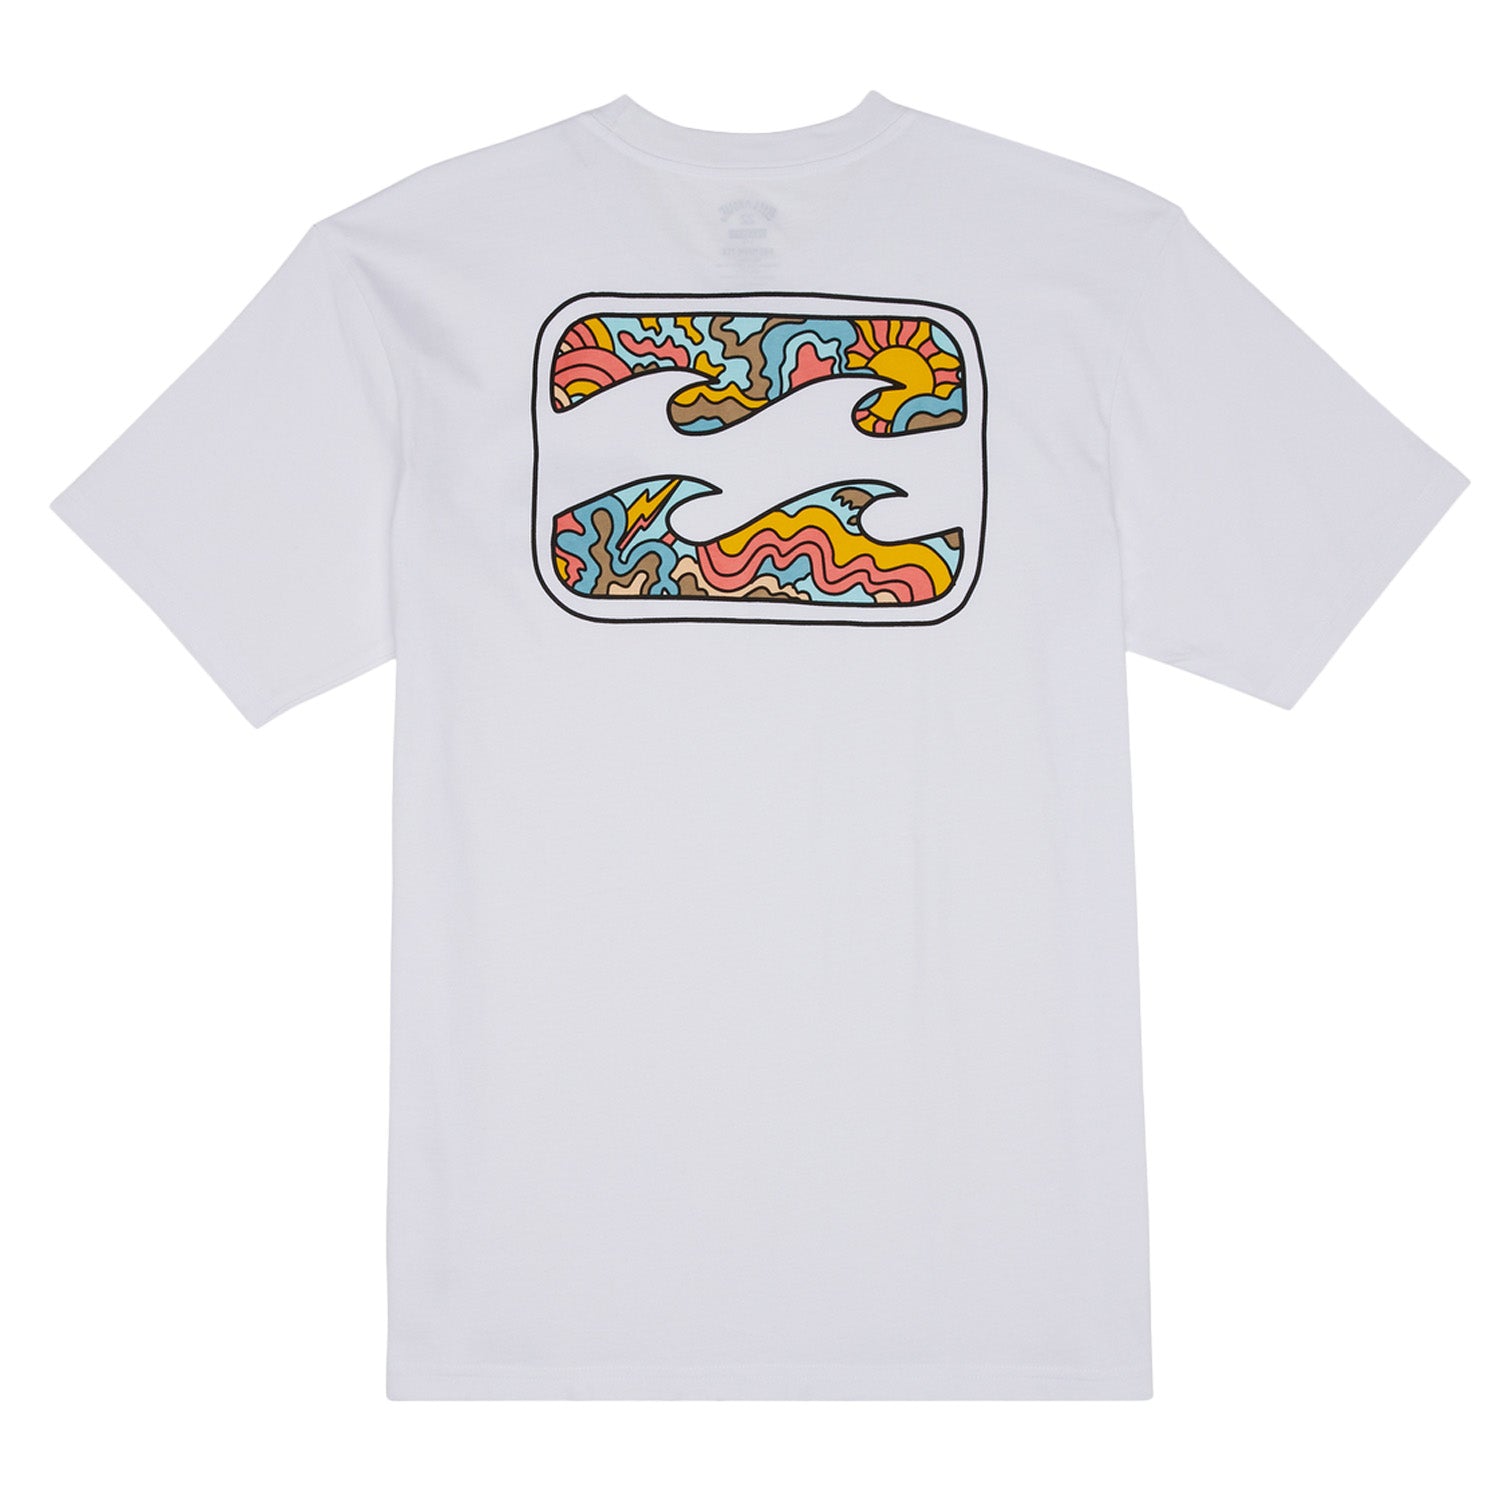 Billabong | Crayon Wave Boys Tee Shirt - White